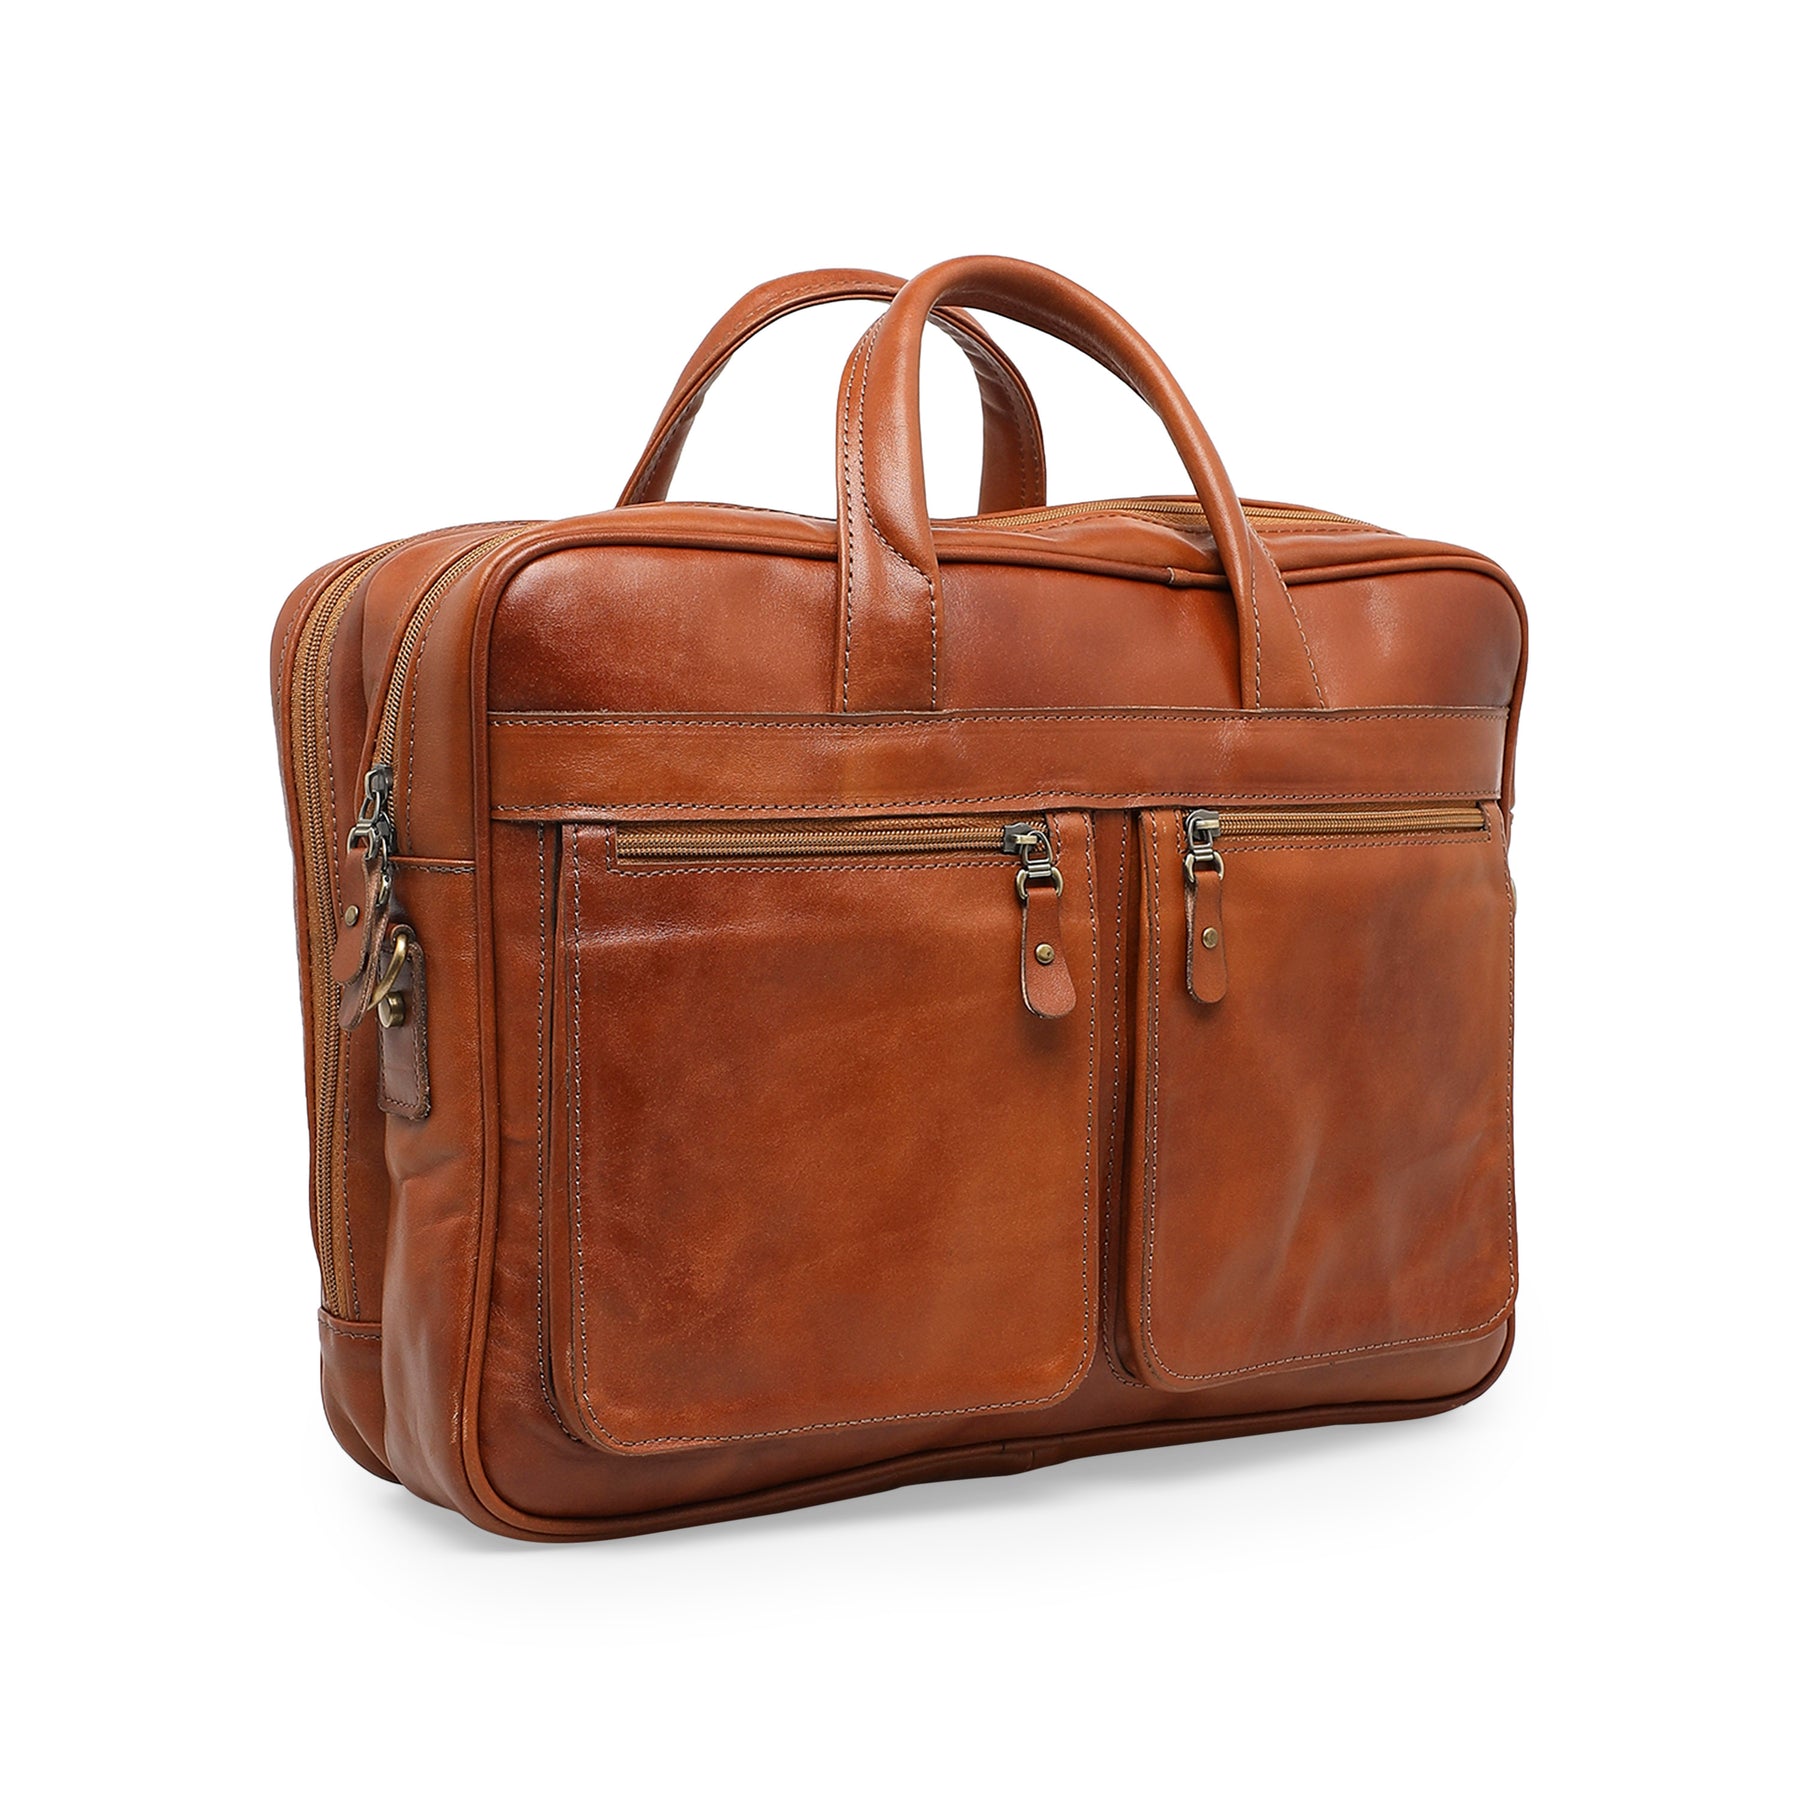 Shop for Camel Leather Travel Bags Online at Best Prices – Nomadic Camel